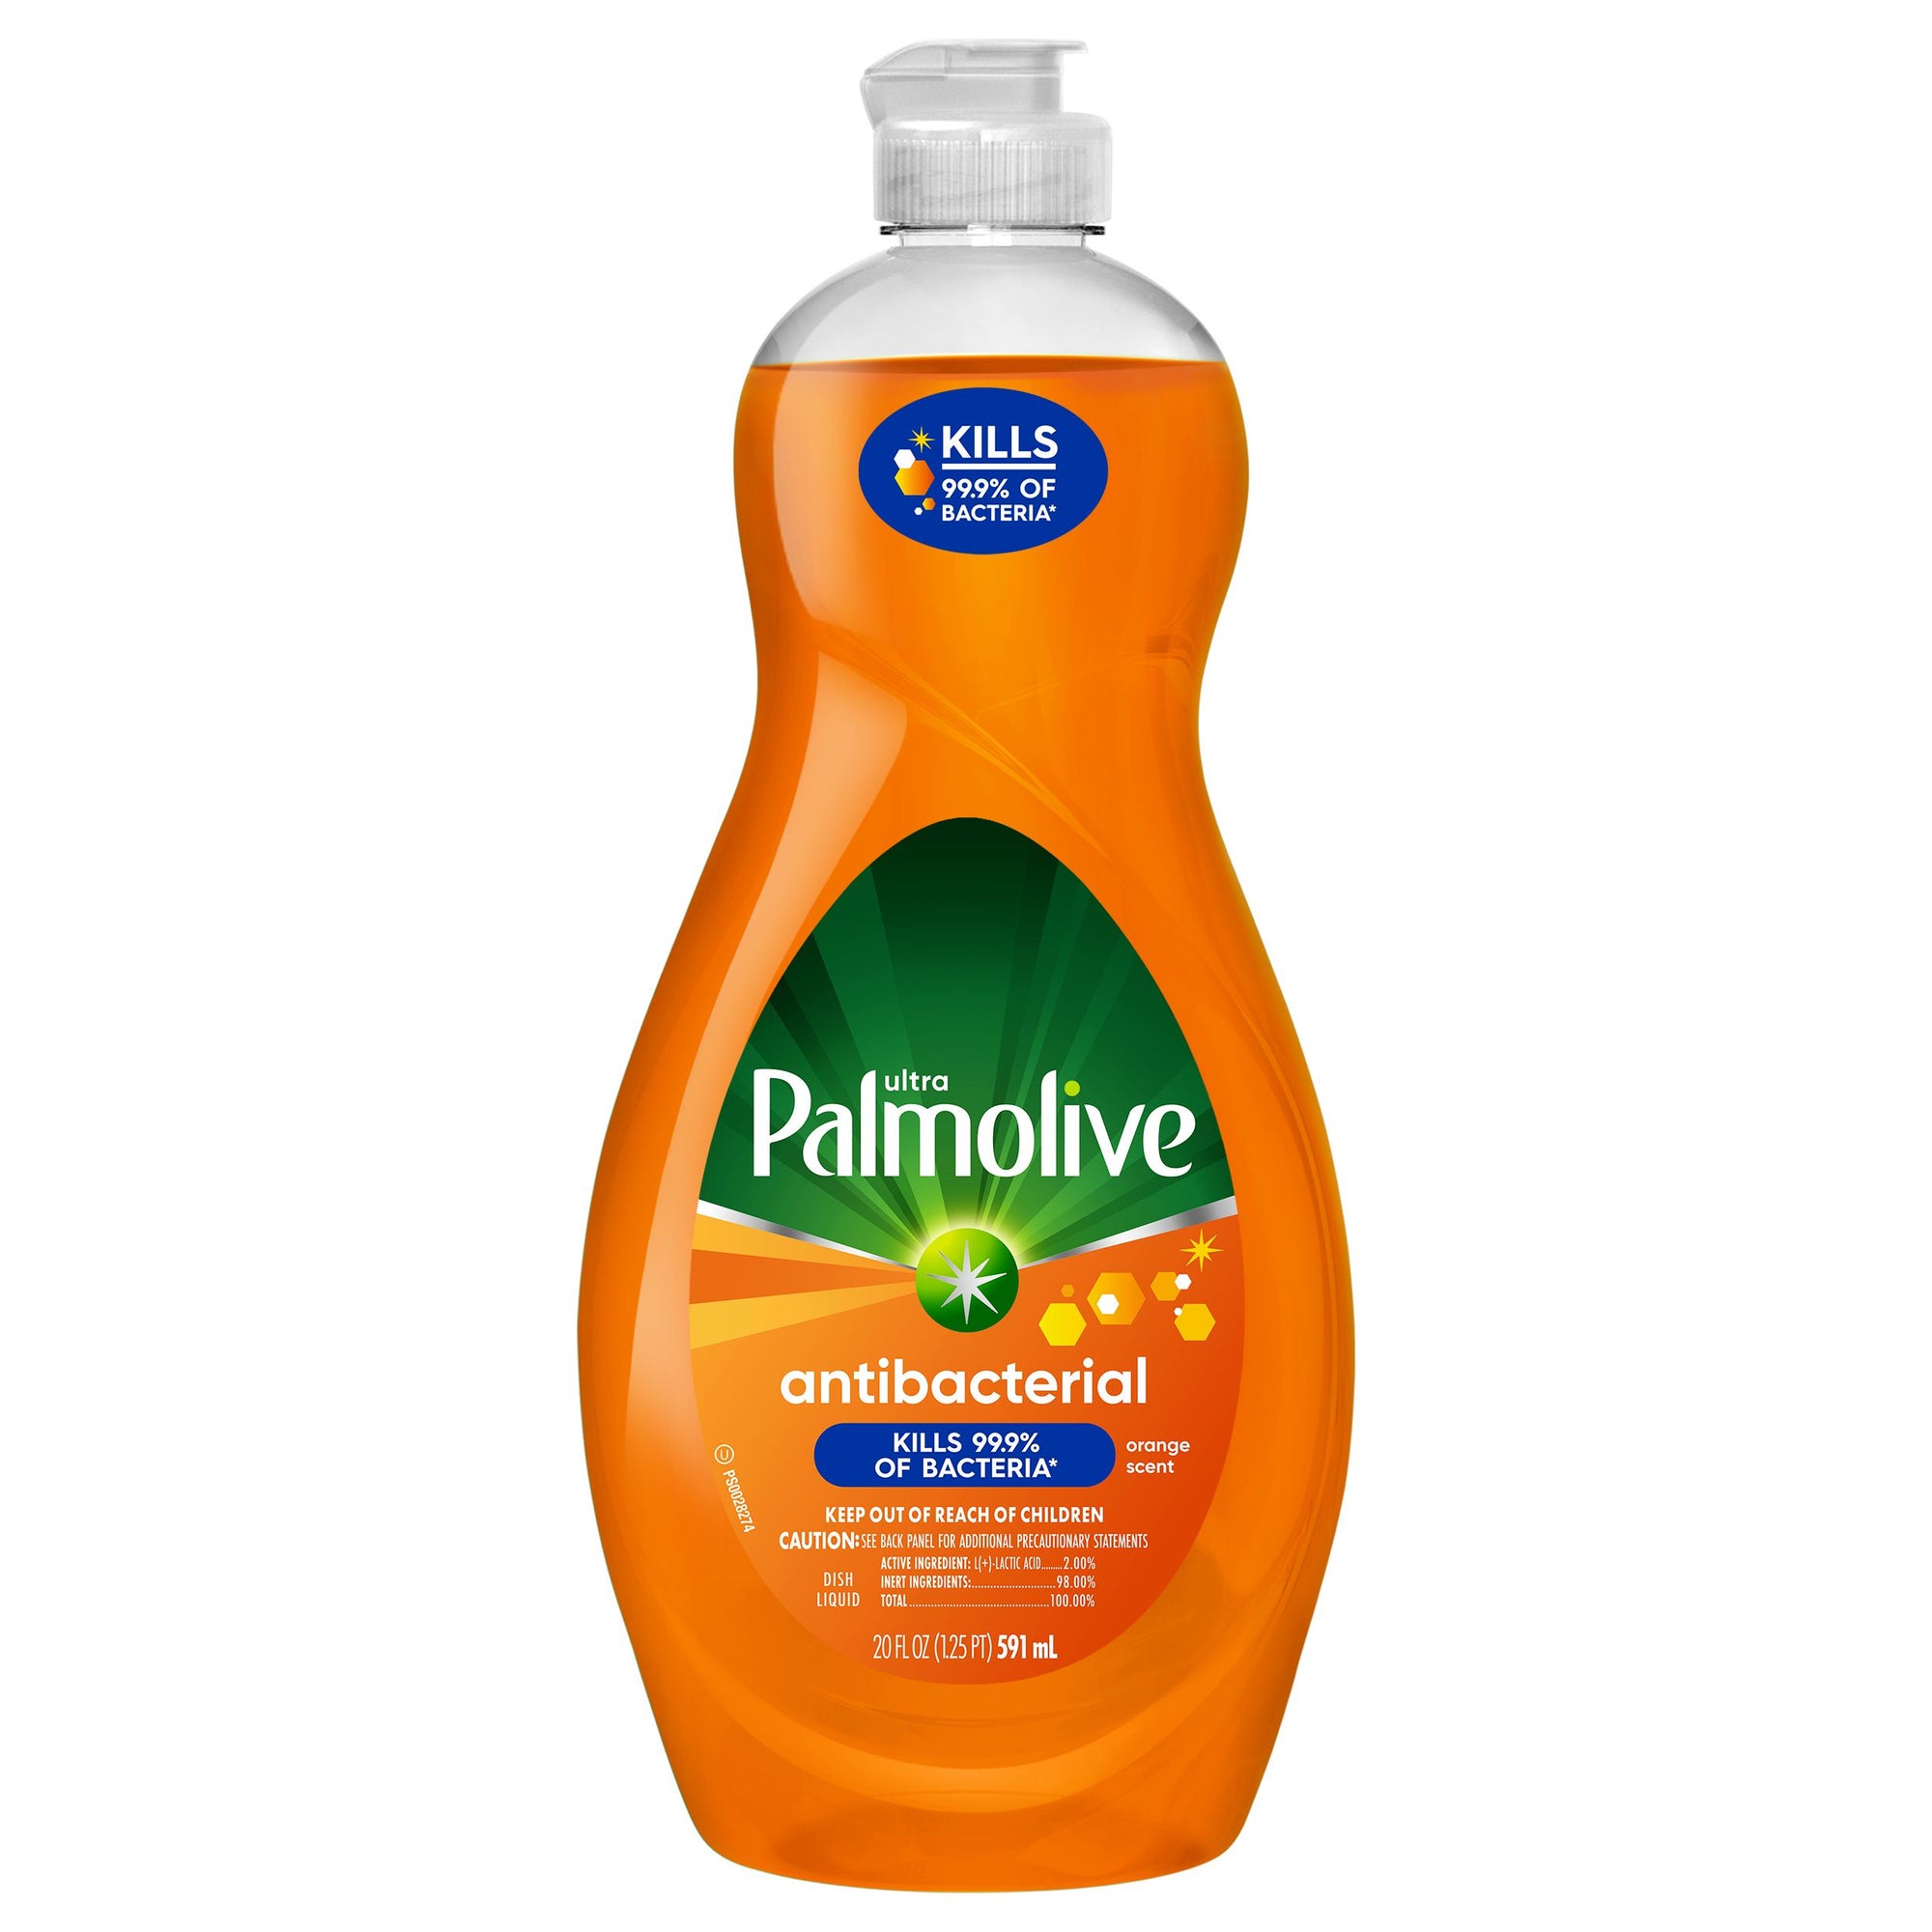 Palmolive Antibacterial Dish Soap Orange 32.5oz